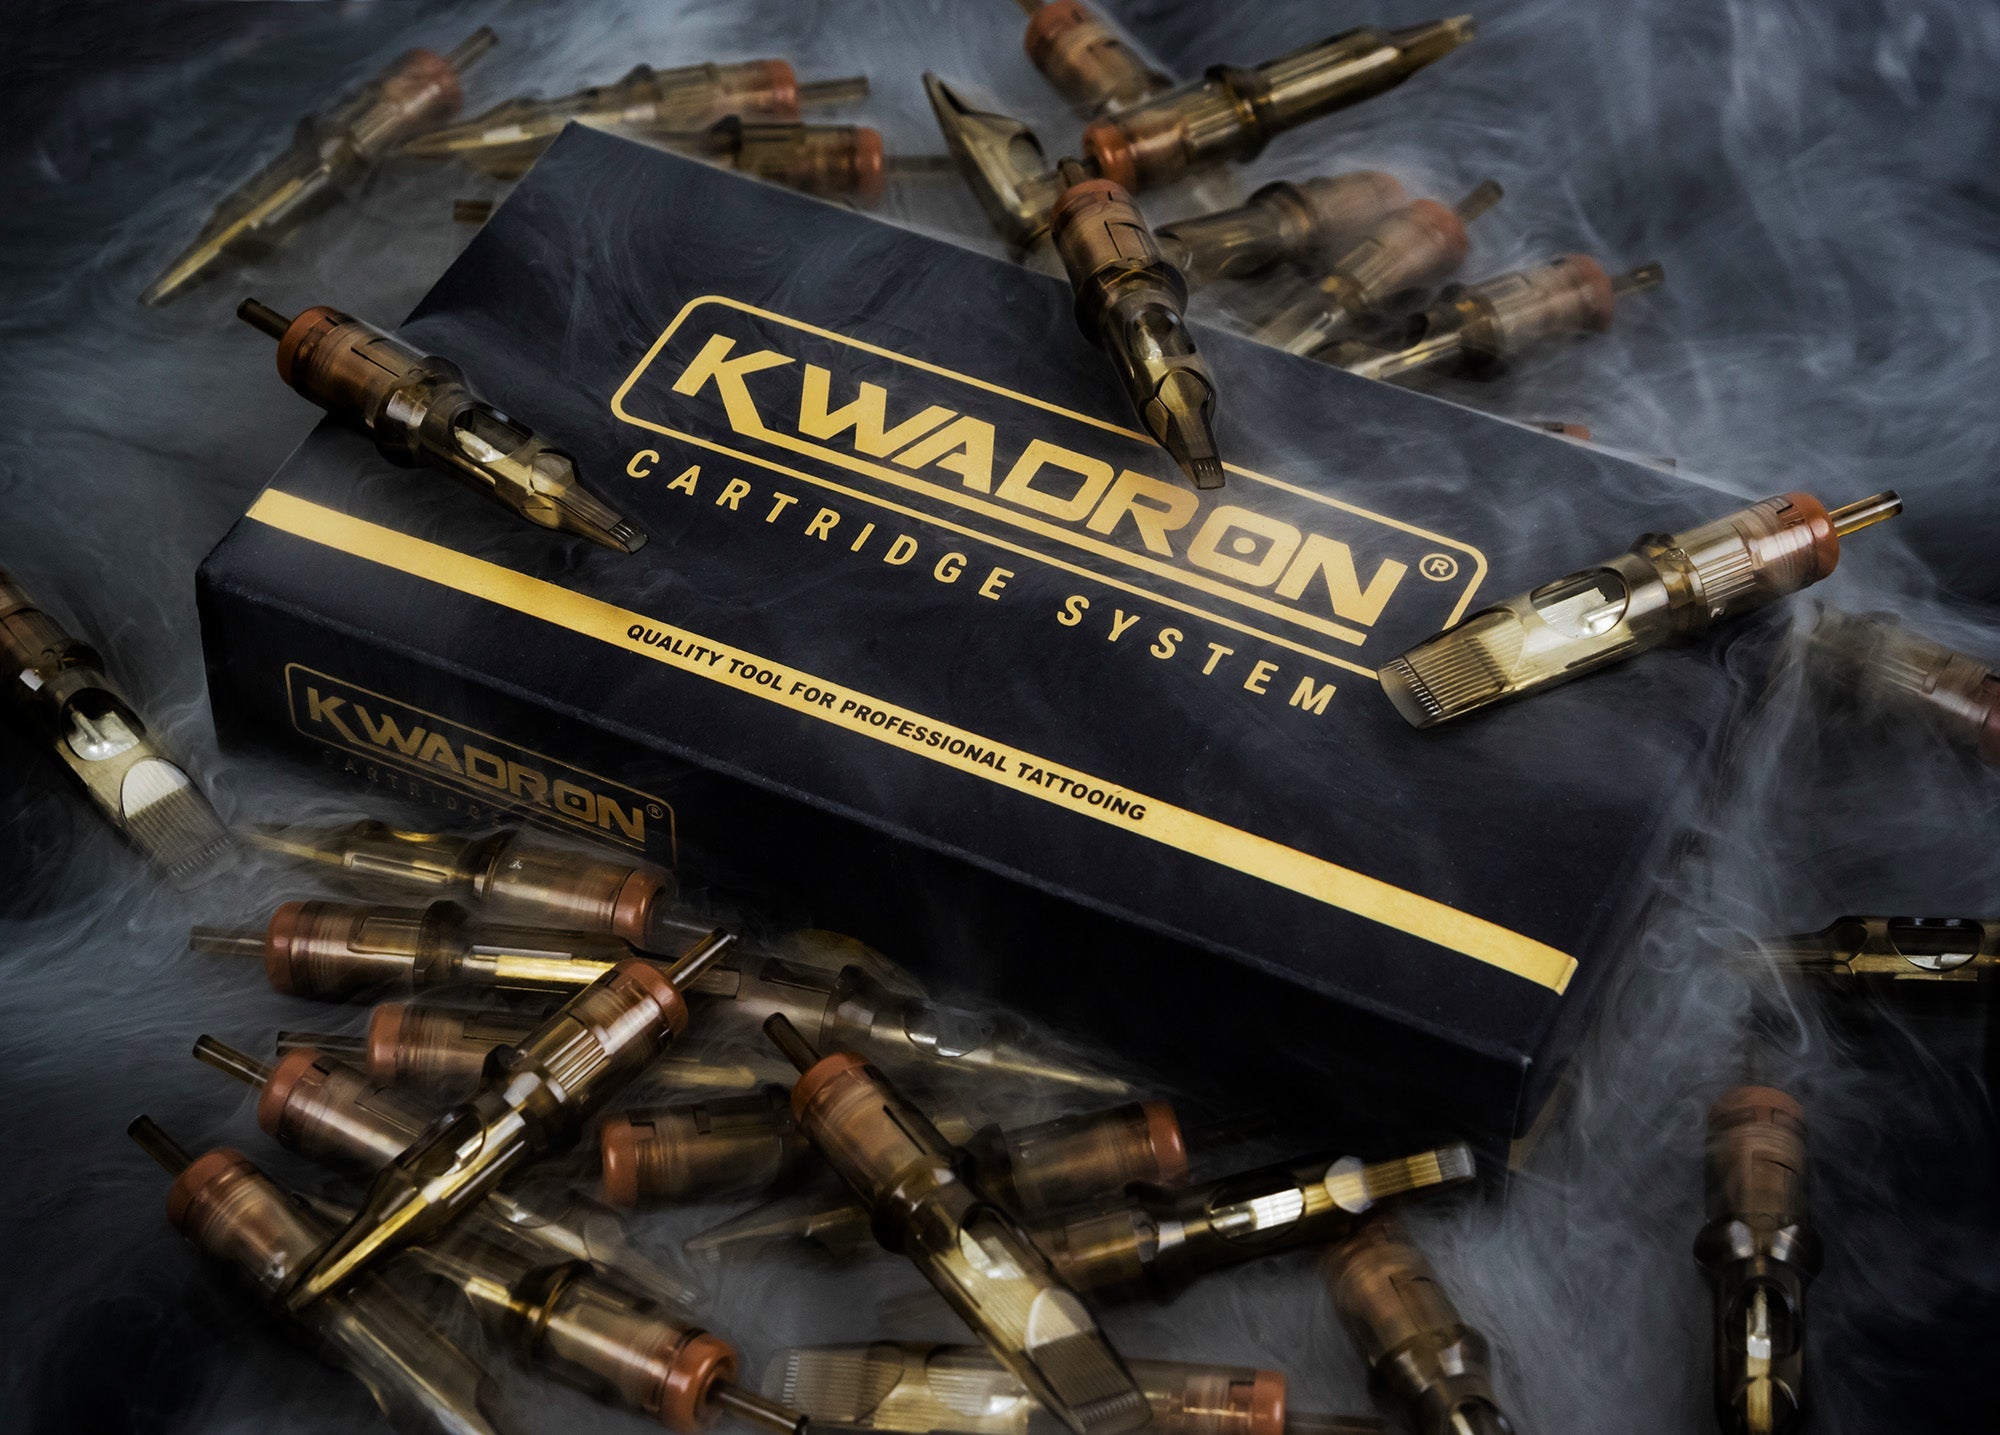 Kwadron Magnum Full Membrane Cartridges